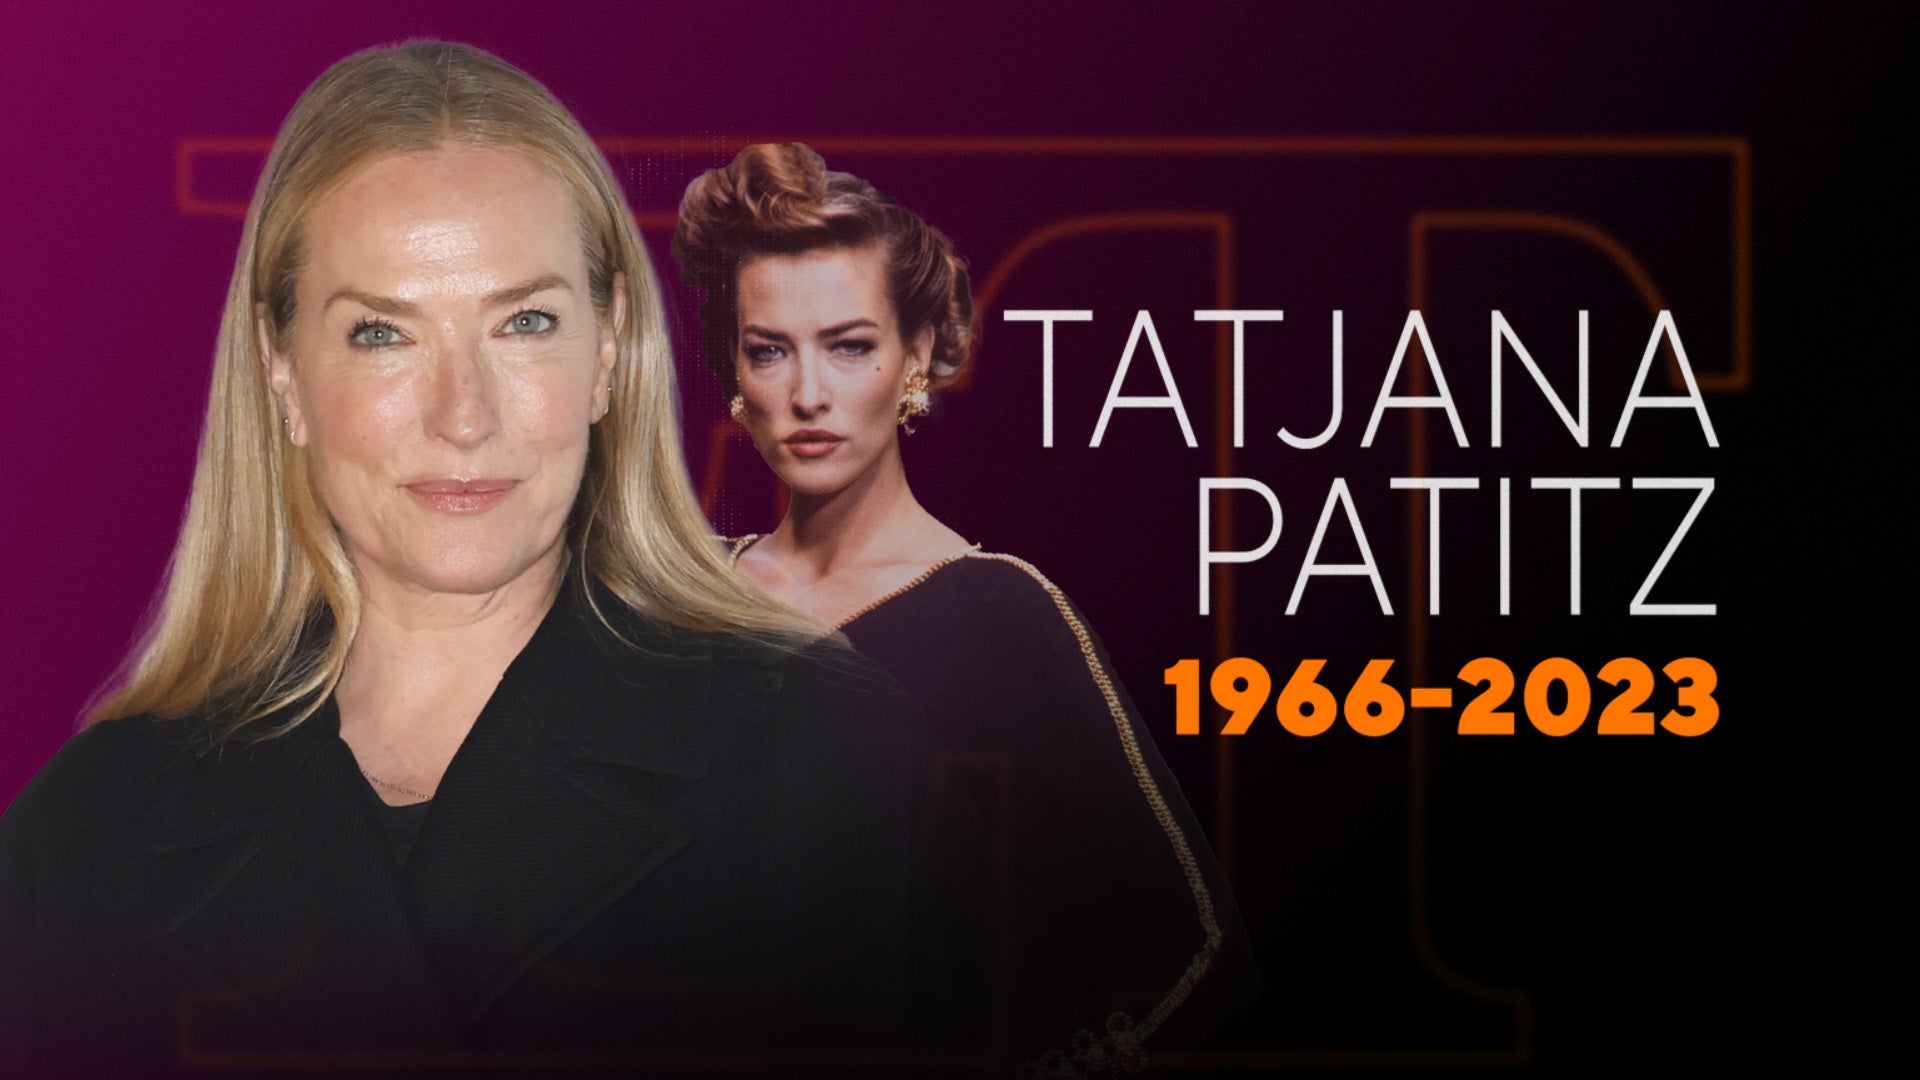 Tatjana Patitz, Top Supermodel of the '80s and '90s, Dead at 56